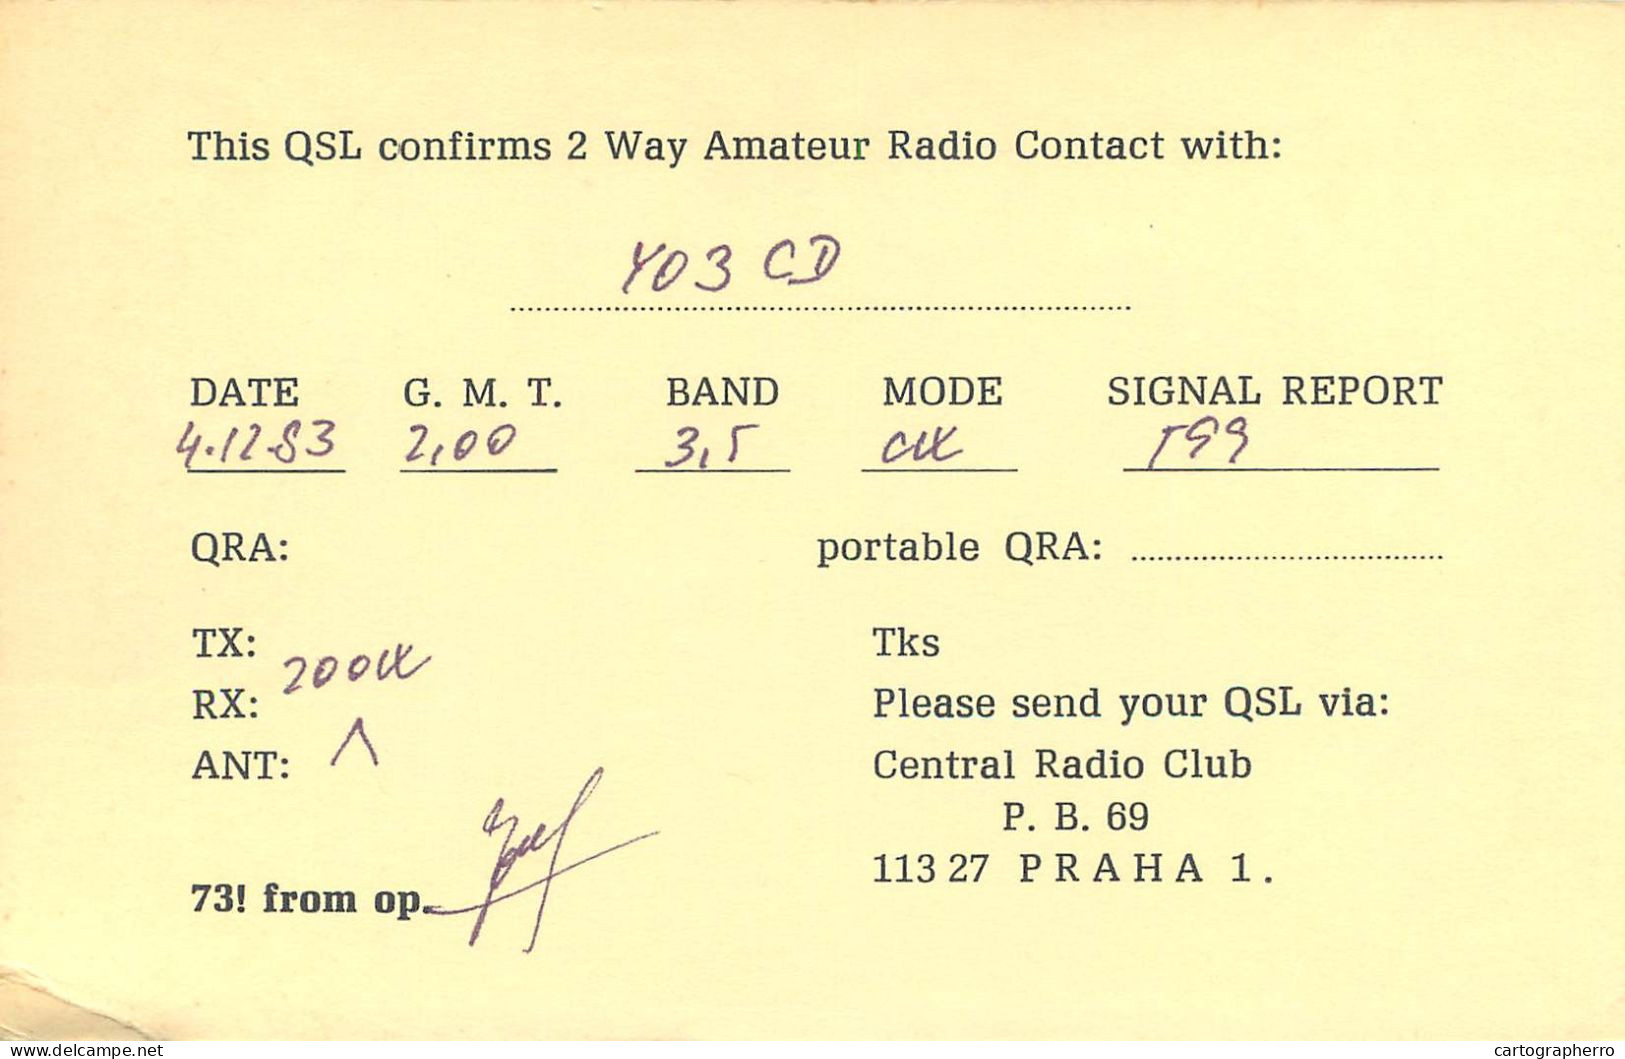 QSL Card Czechoslovakia Radio Amateur Station OK1XC Y03CD - Radio Amateur